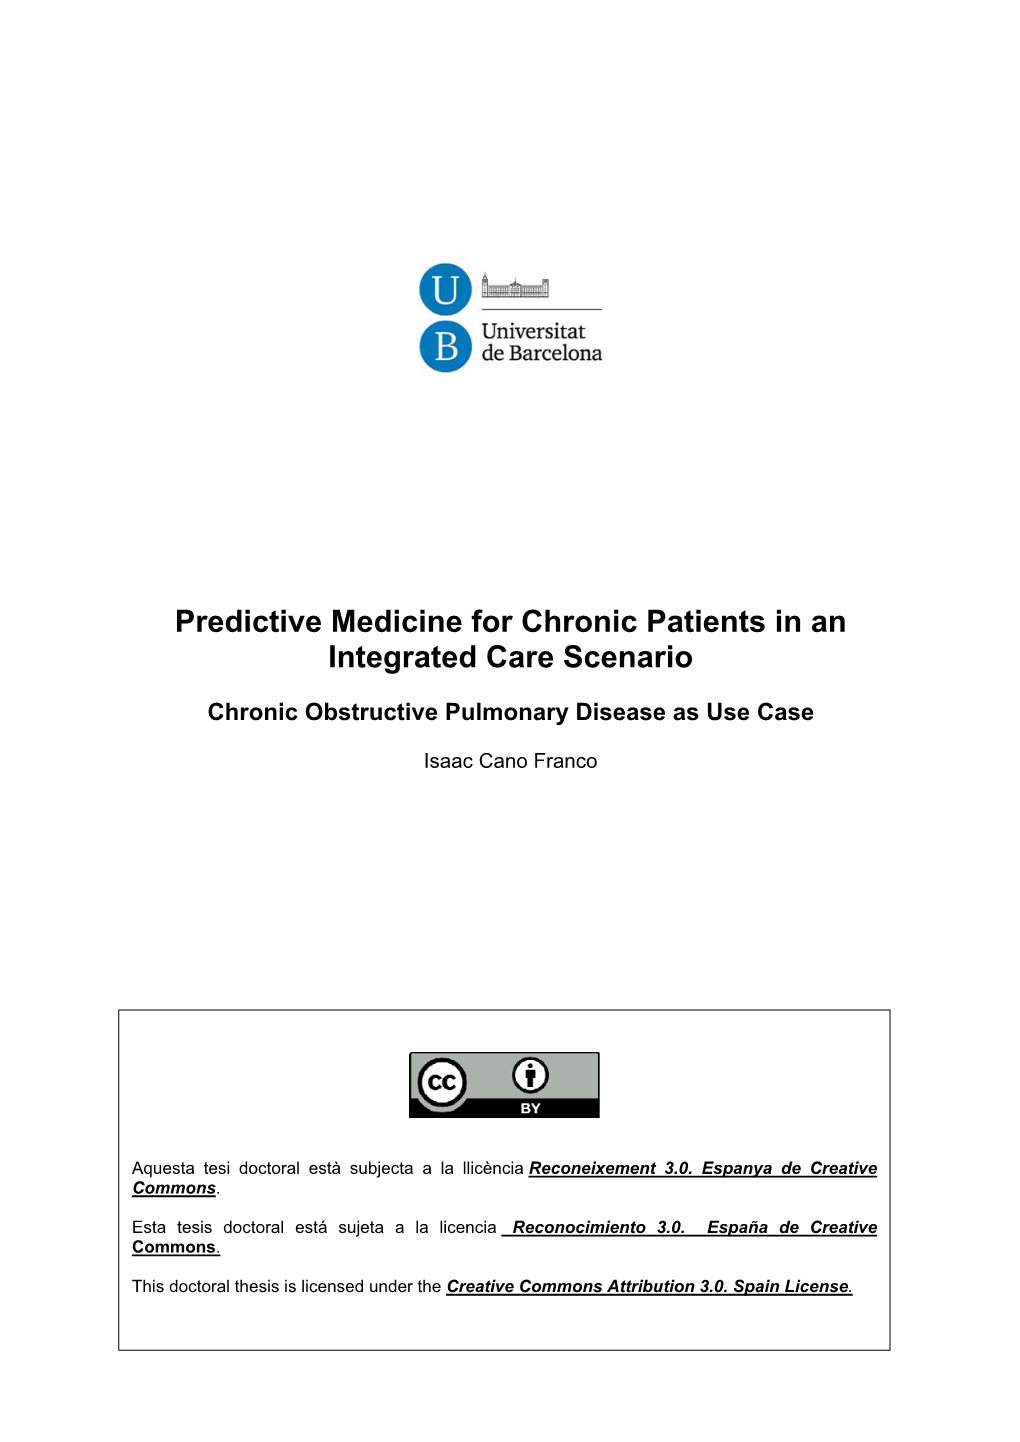 Predictive Medicine for Chronic Patients in an Integrated Care Scenario